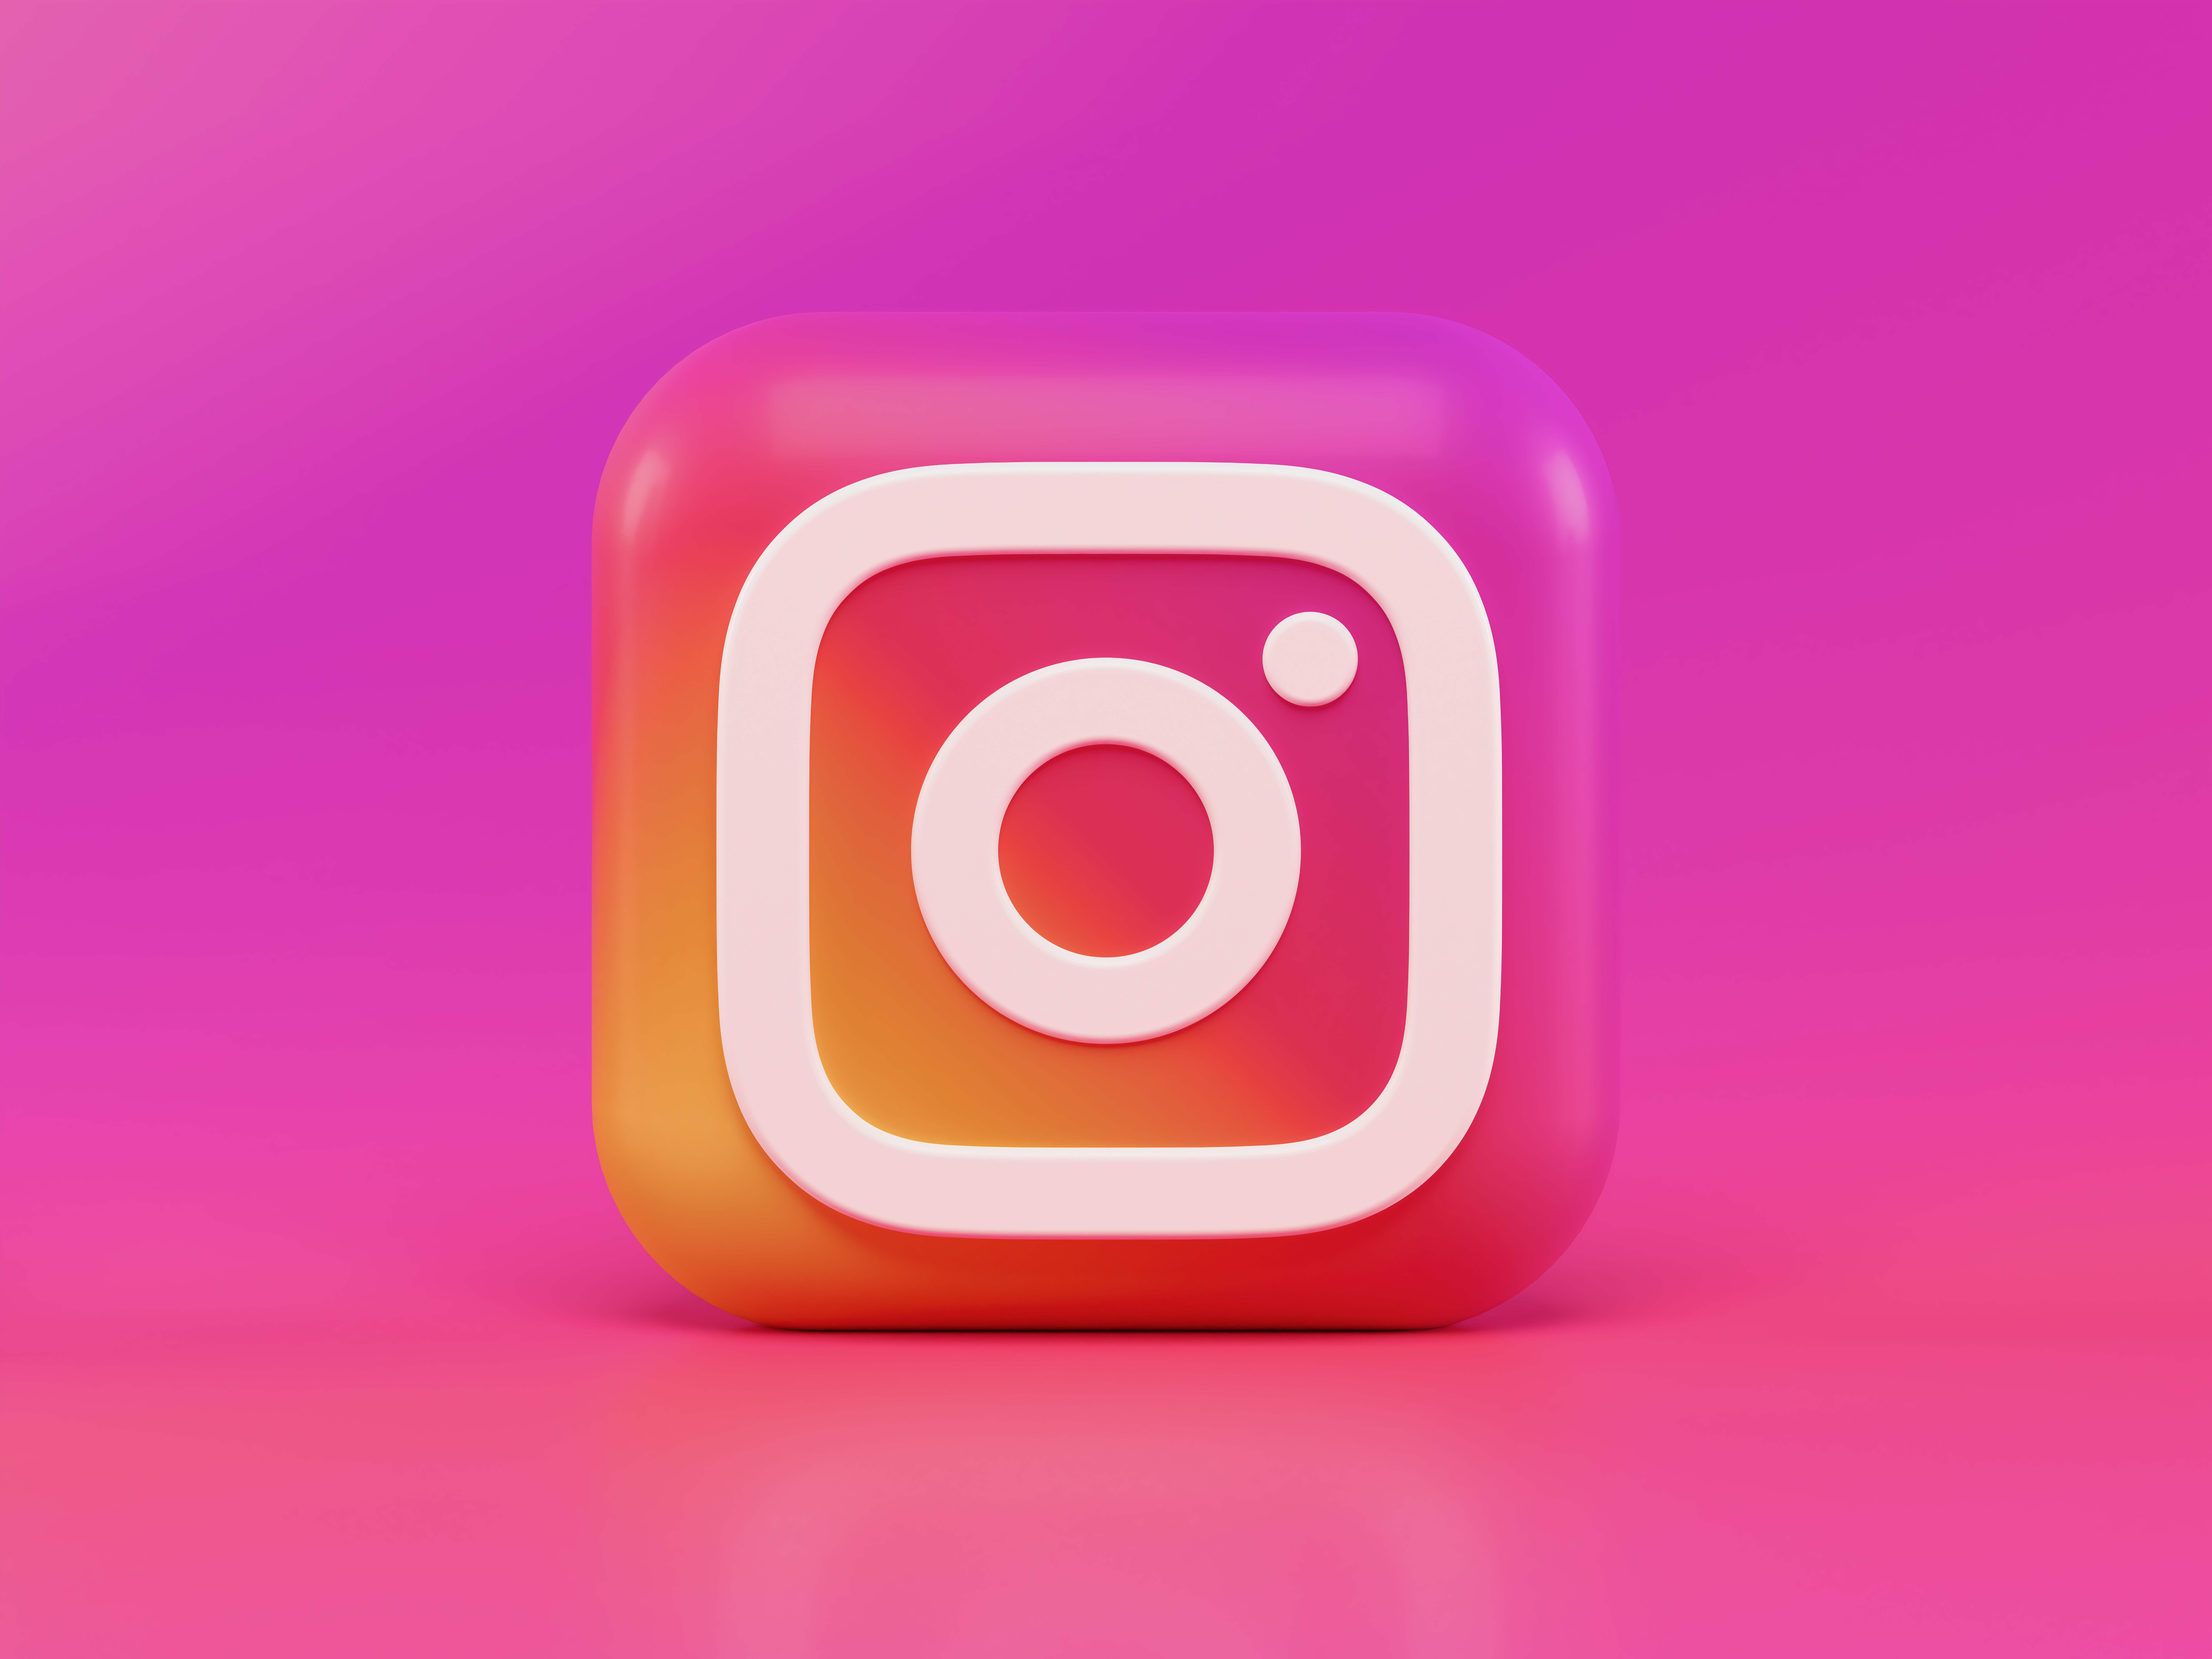 The Instagram logo in a bubble icon